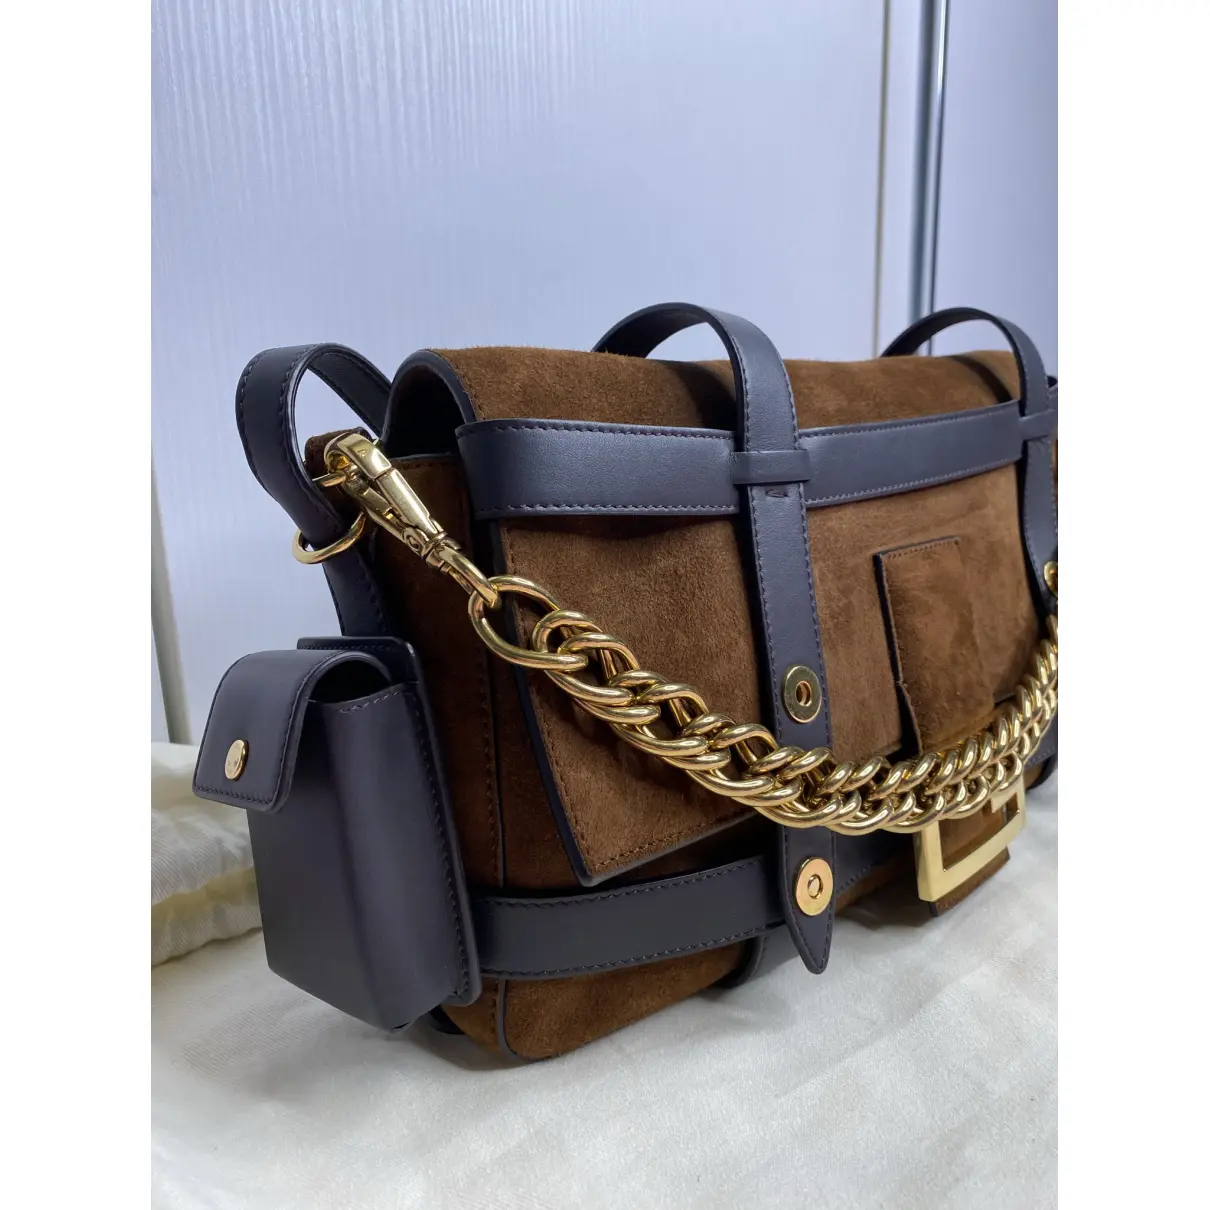 Buy Fendi Baguette Cage handbag online